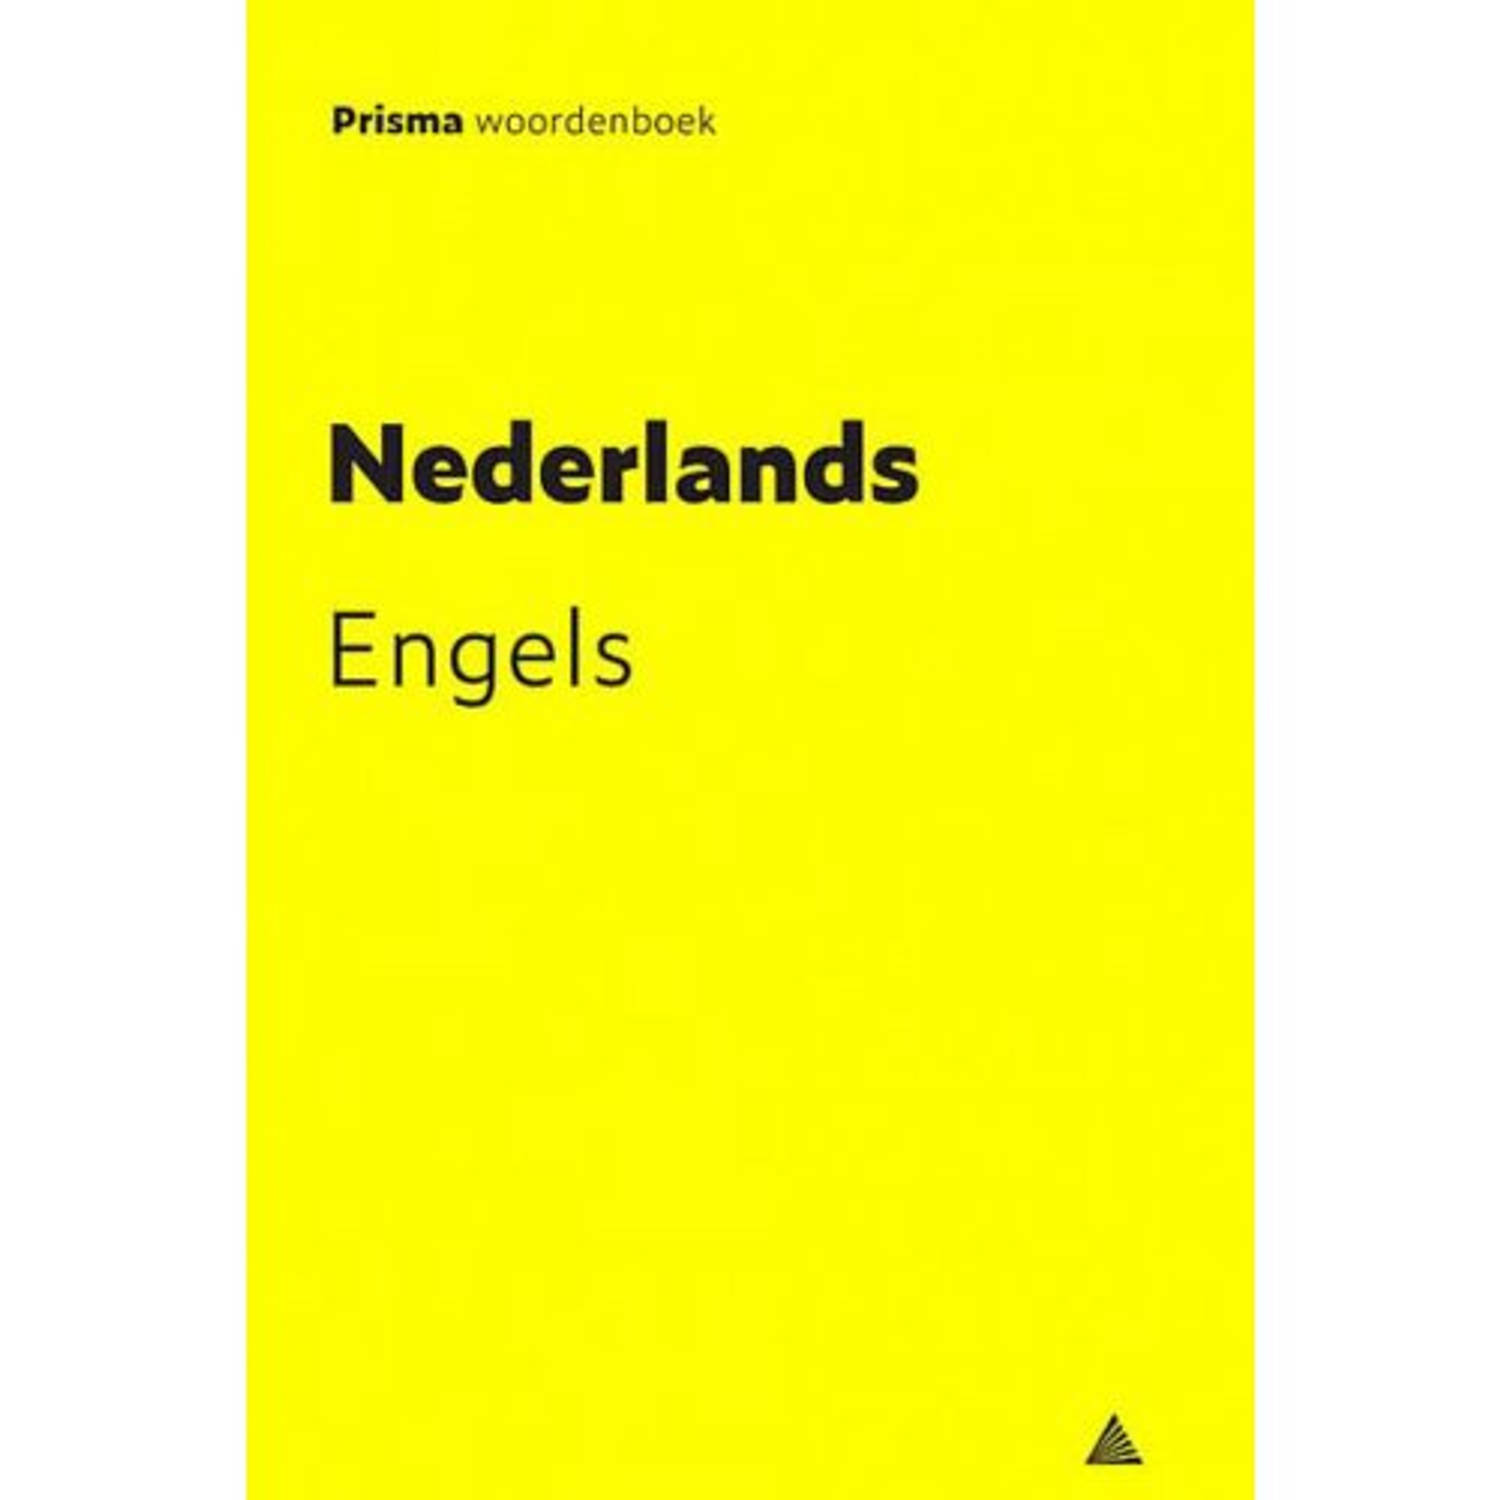 Prisma Woordenboek Nederlands-engels